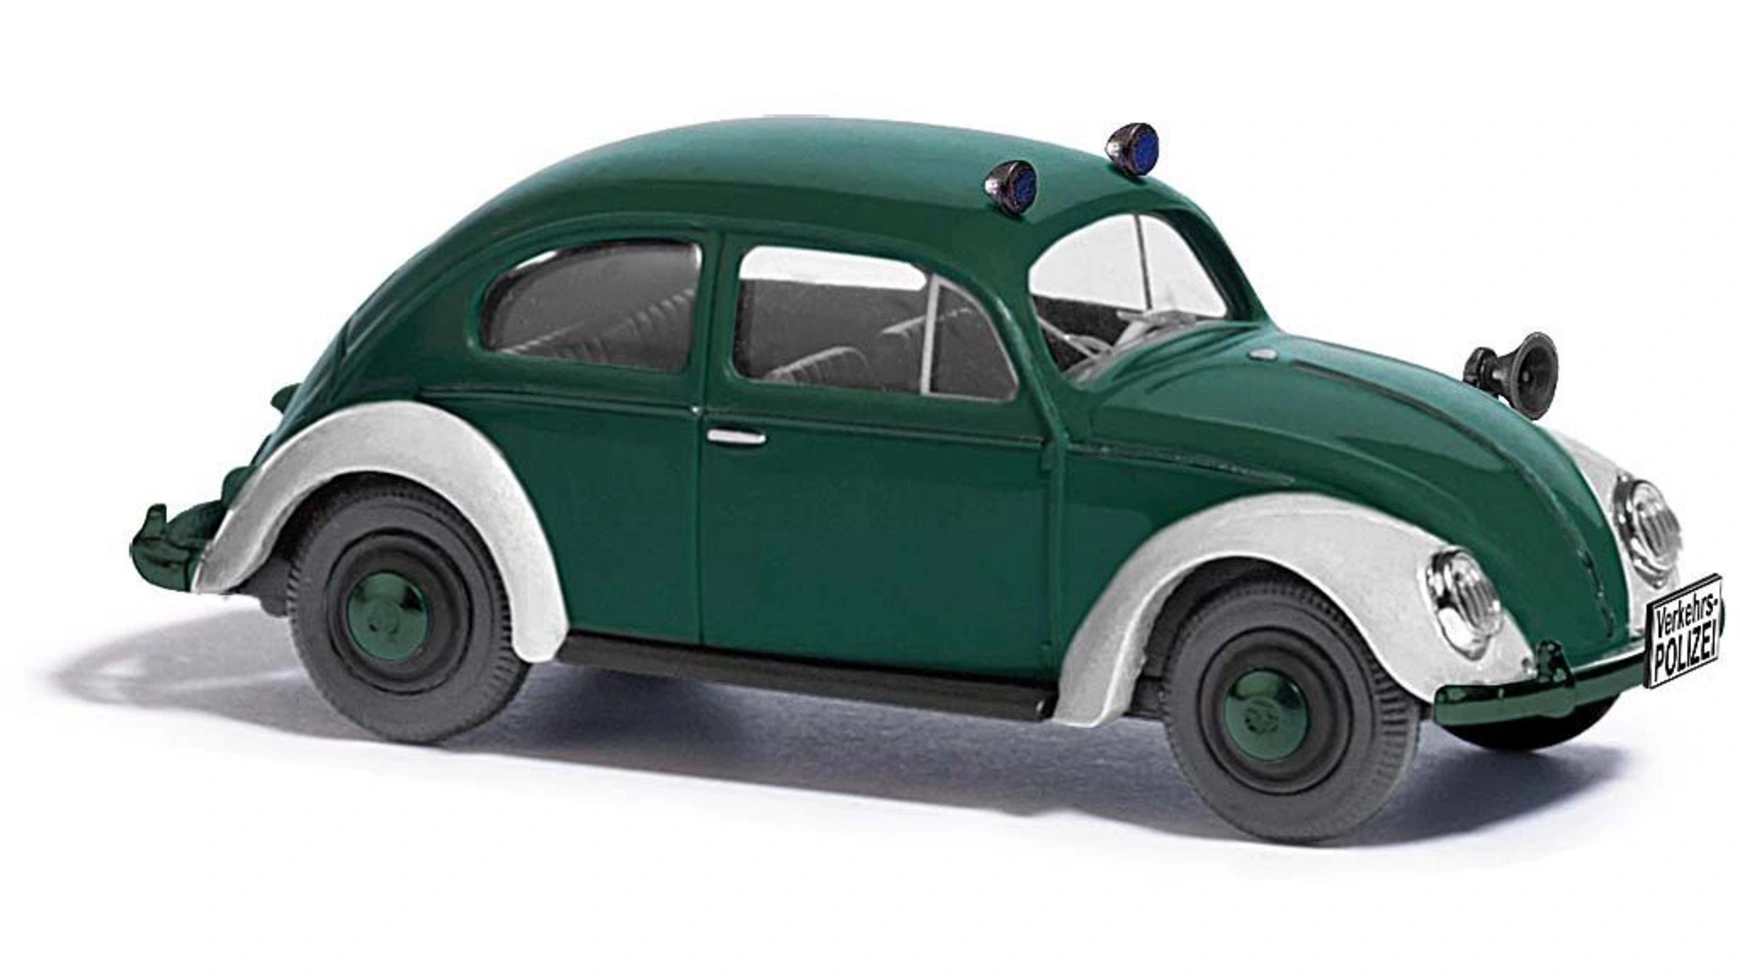 Busch Modellspielwaren 1:87 VW Beetle с овальным окном, полицейский, 1955 года выпуска. набор jada toys tmnt hwr vw drag beetle w michelangelo figure 34018 1959 vw drag beetle